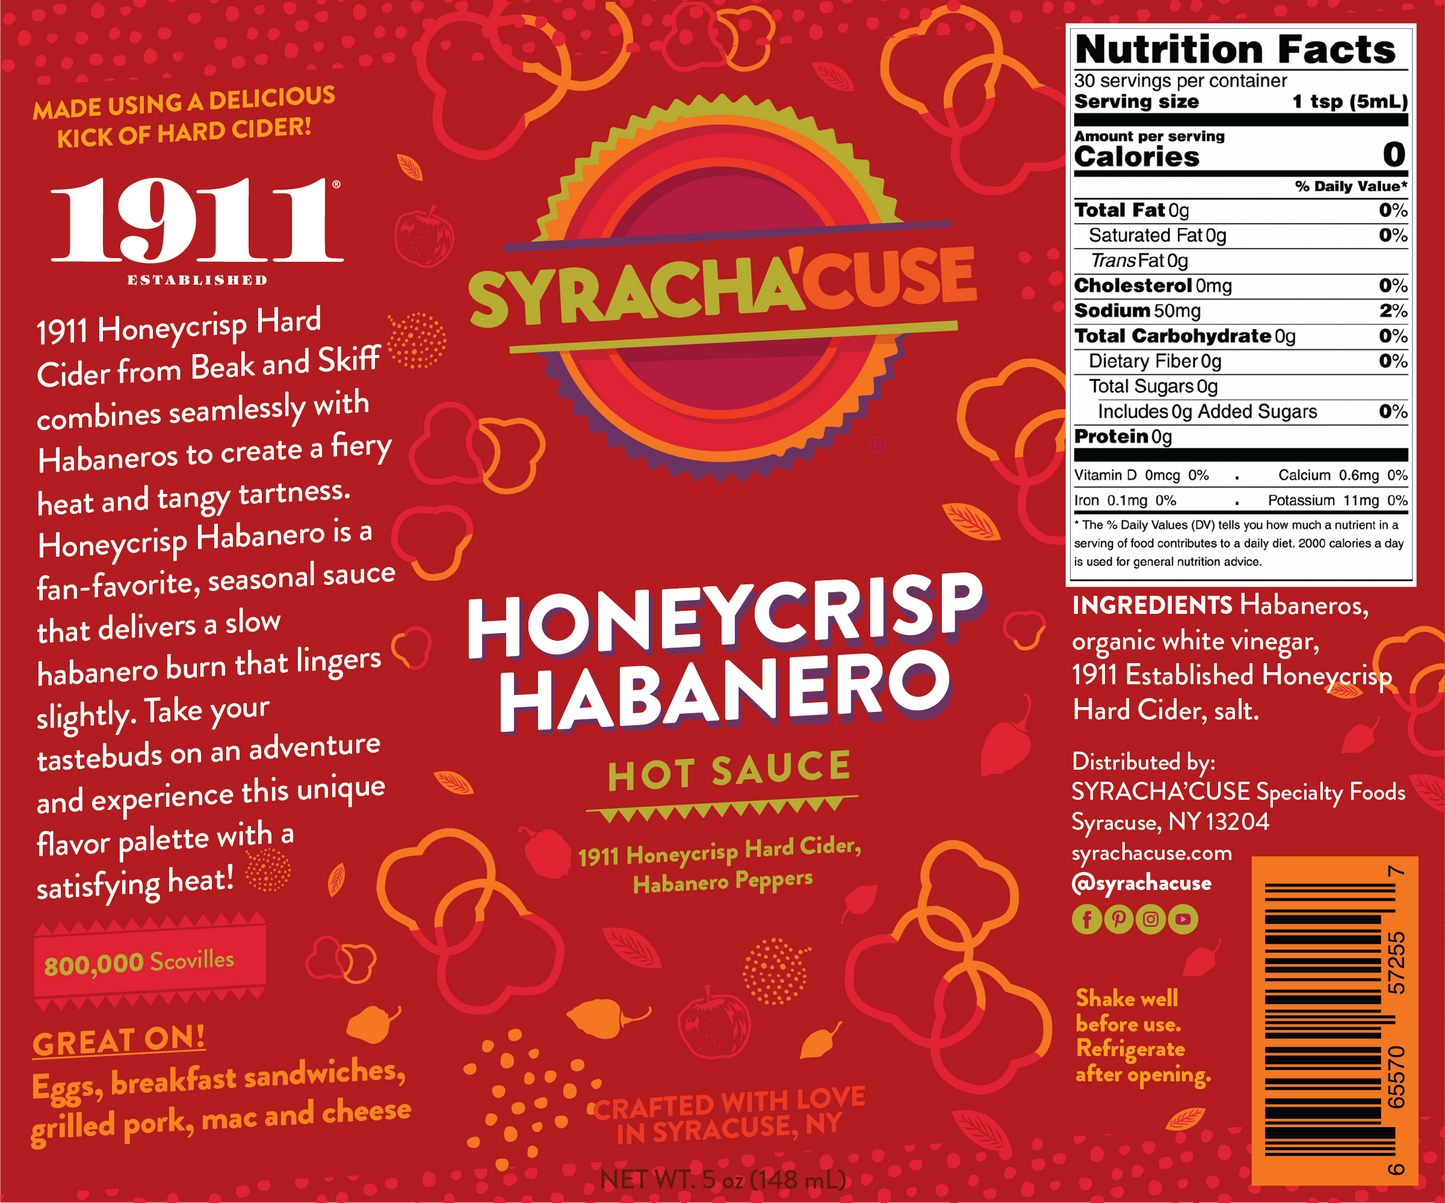 HONEYCRISP HABANERO Hot Sauce Made with 1911 Honeycrisp Hard Cider